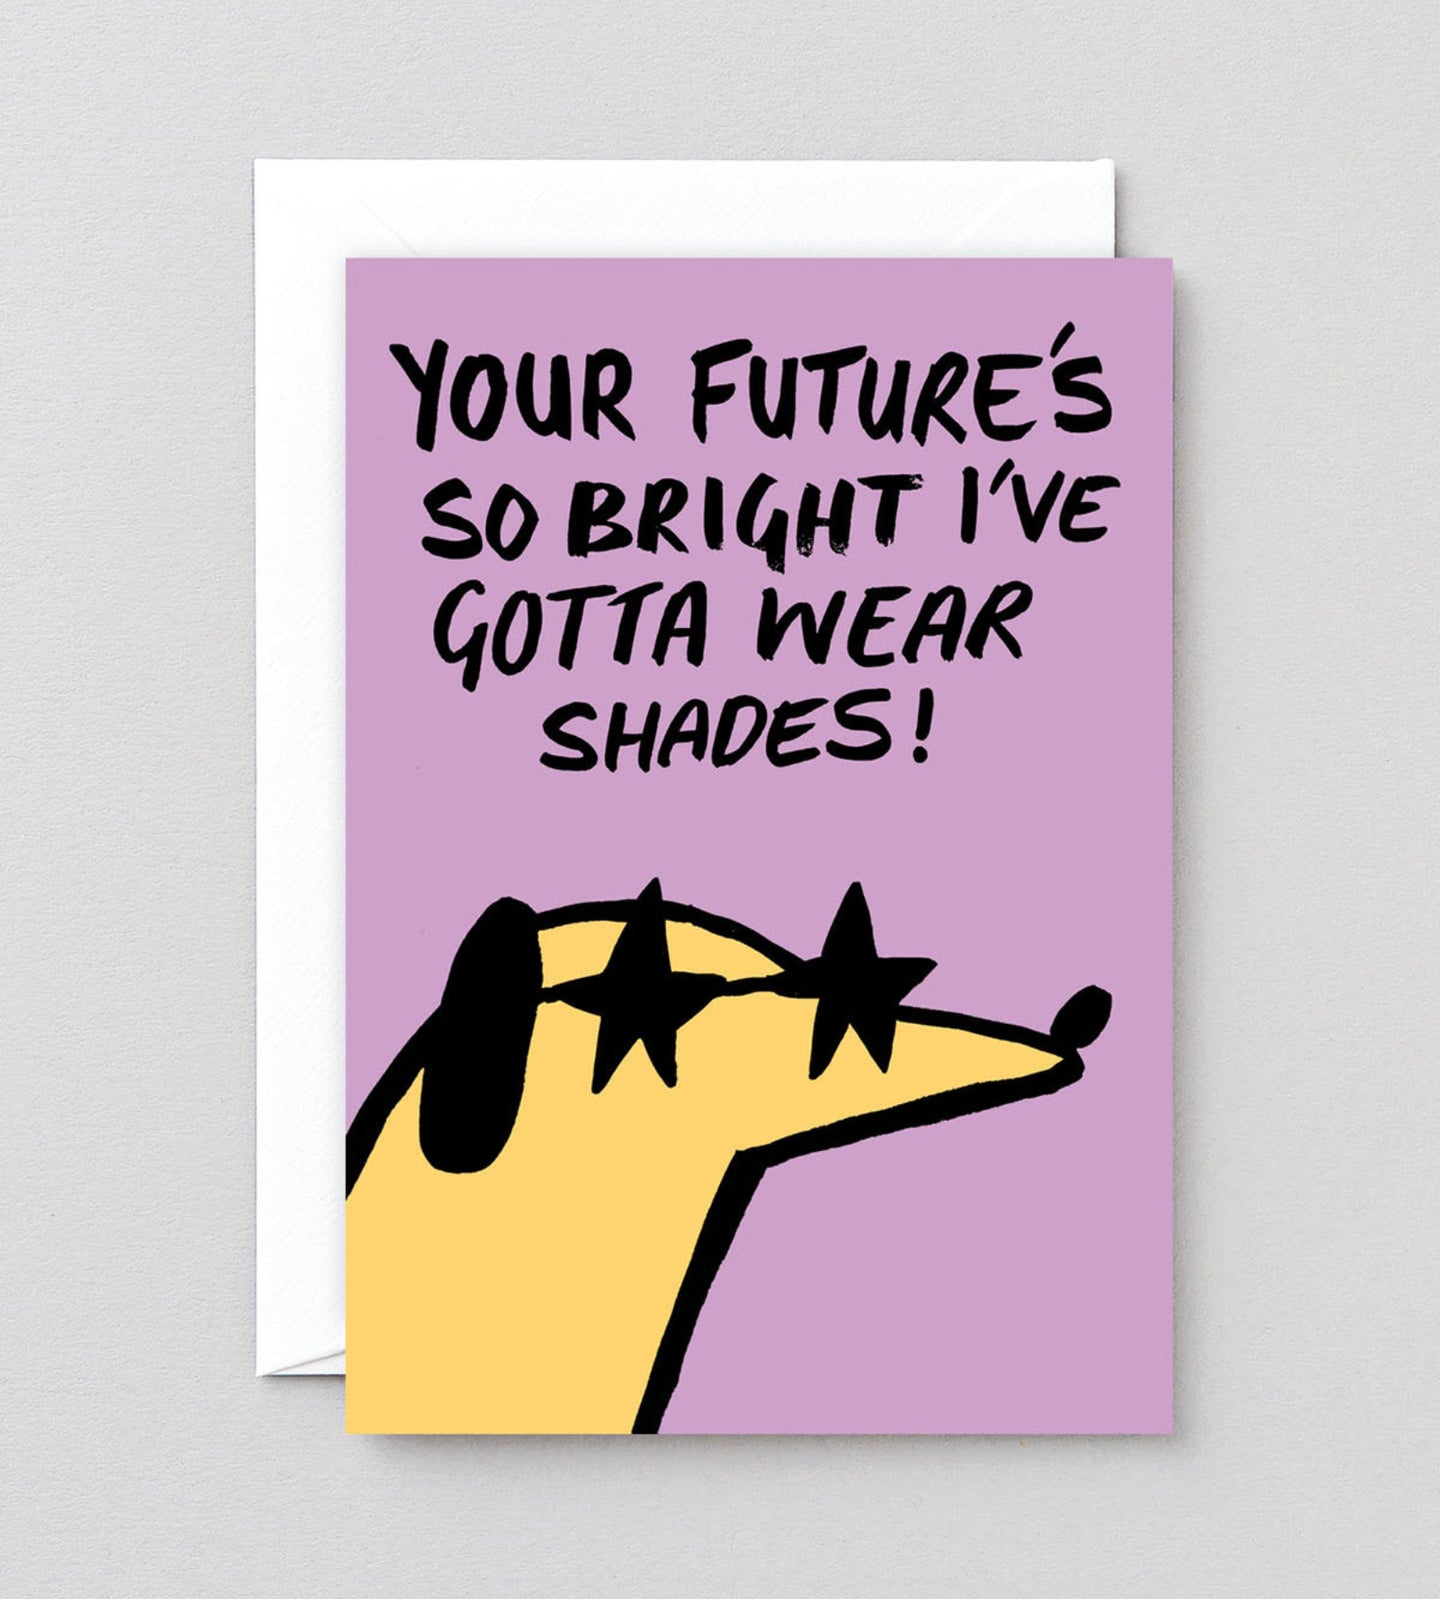 YOUR FUTURE'S BRIGHT CARD WRAP